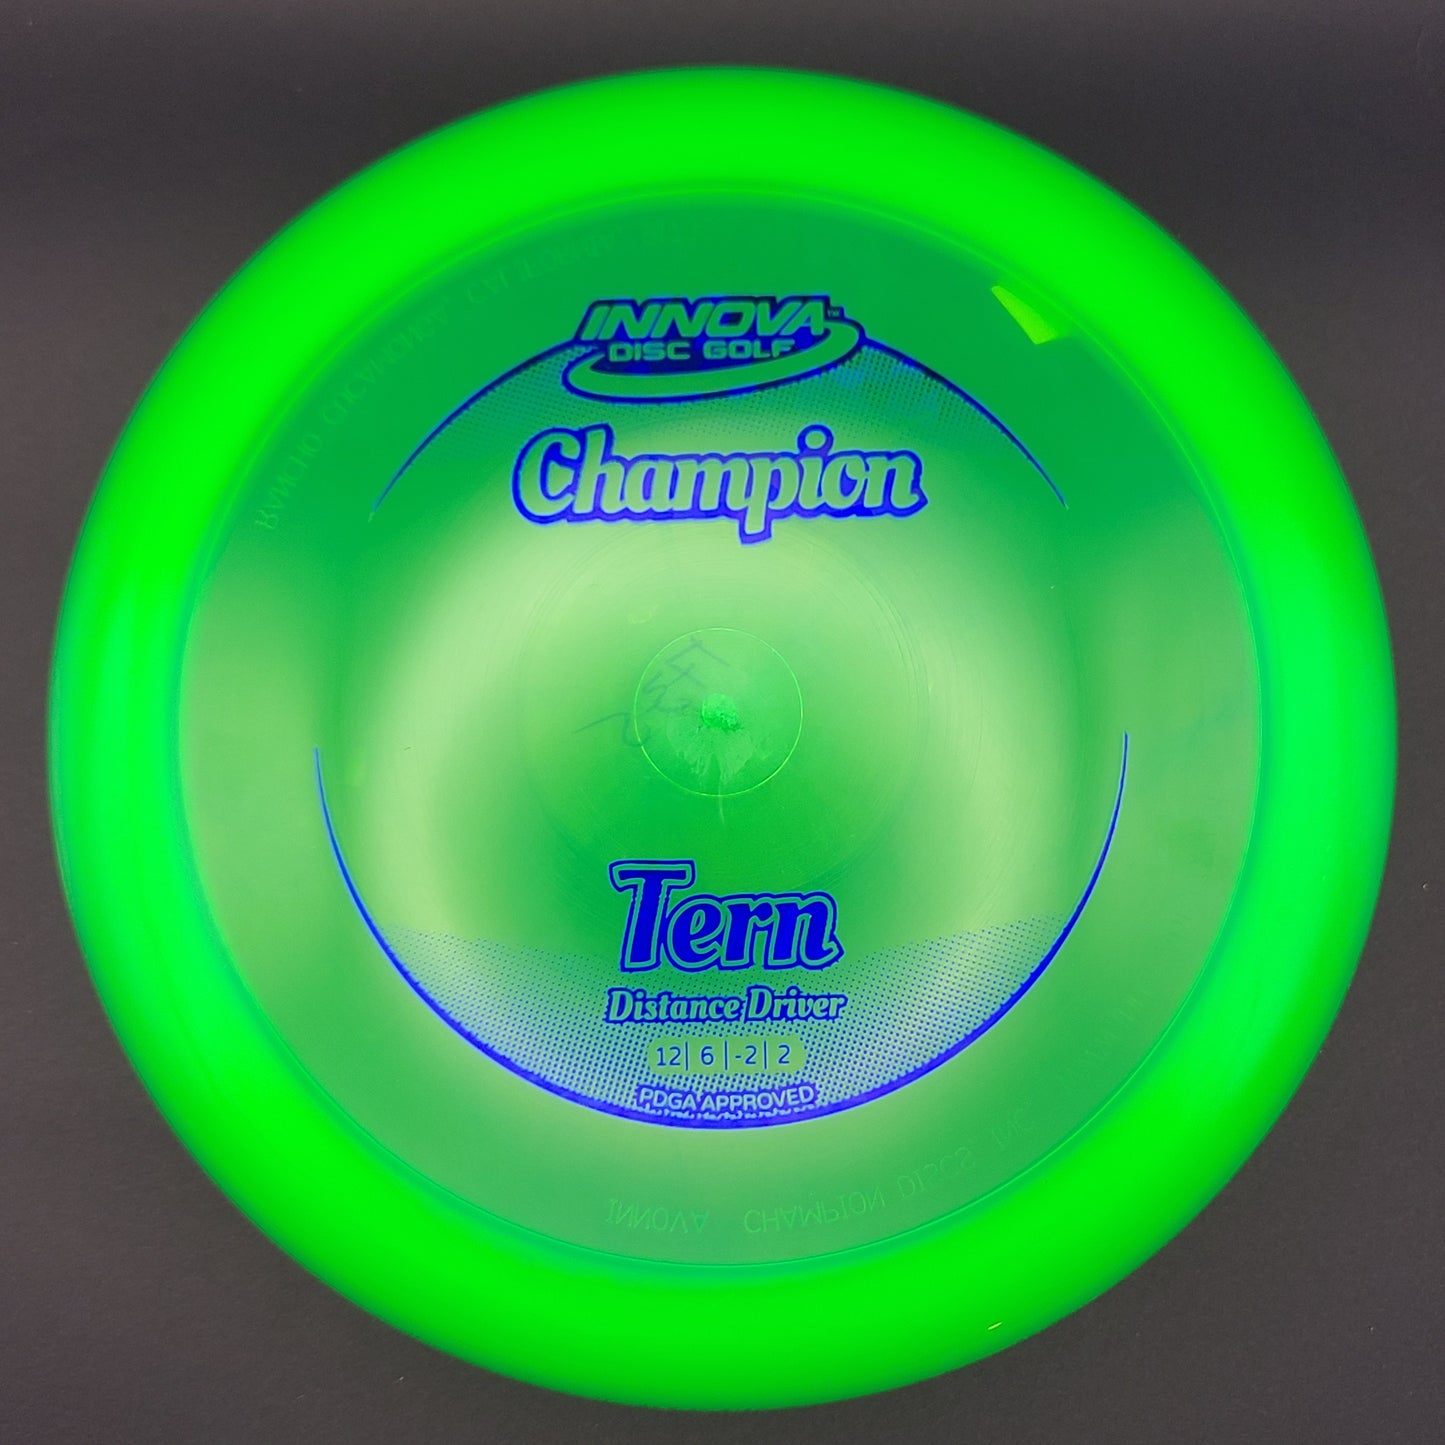 Innova - Tern - Champion